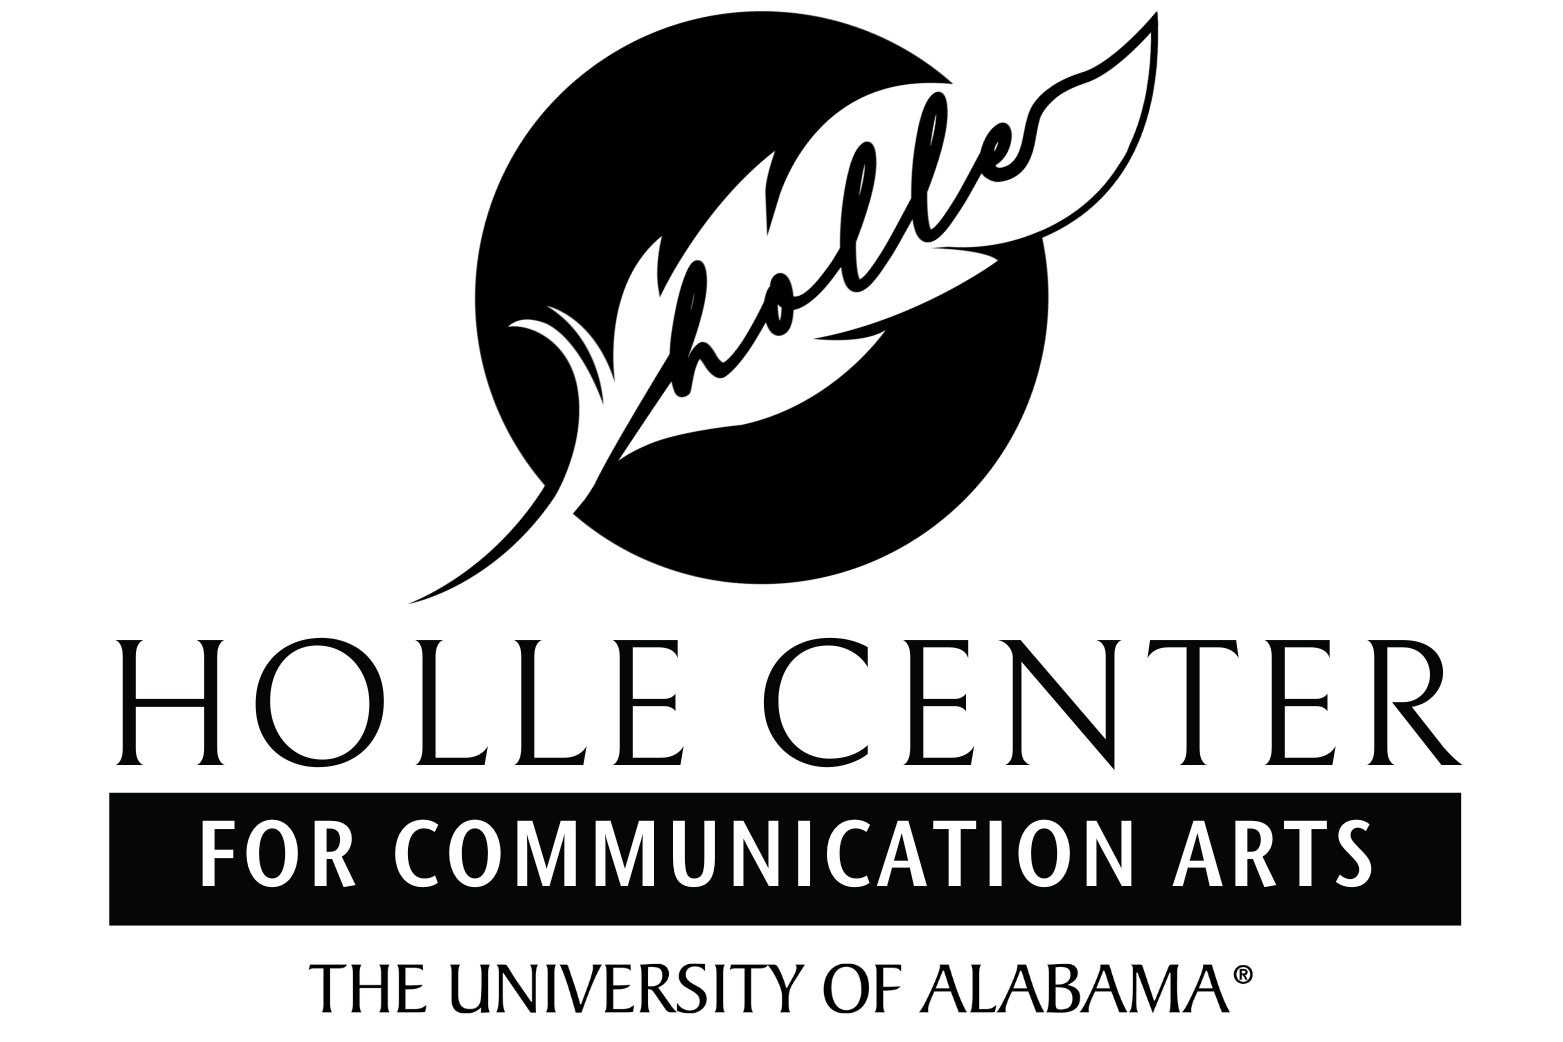 Holle Center for Communication Arts
The University of Alabama